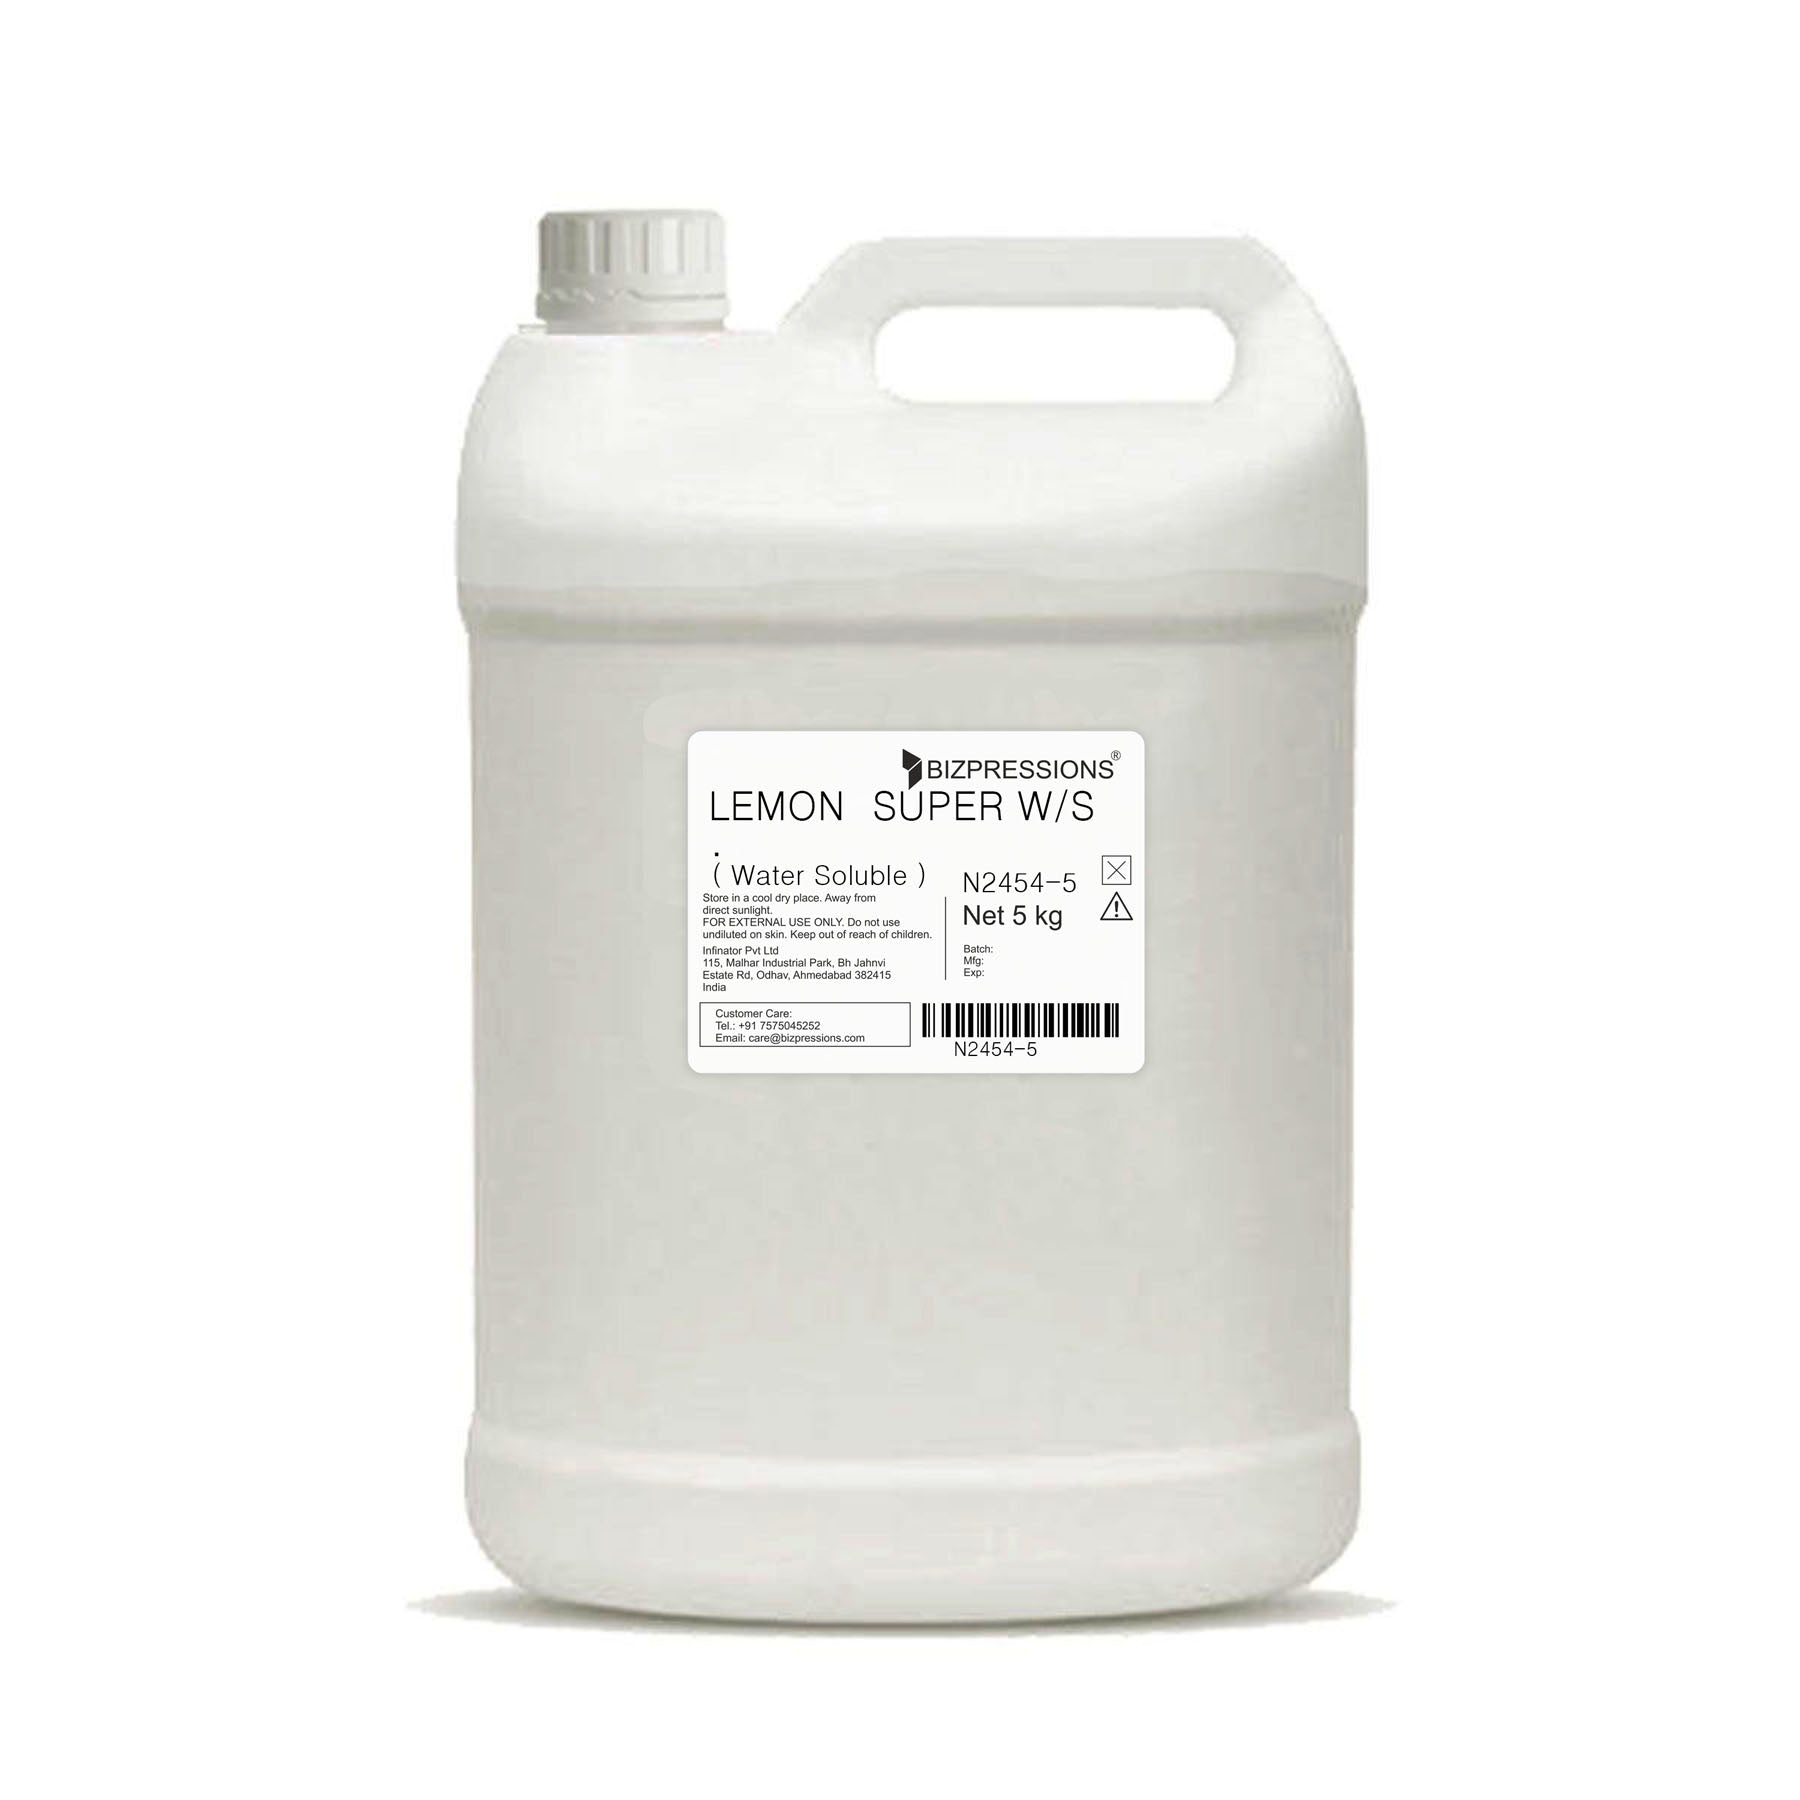 LEMON SUPER W/S - Fragrance ( Water Soluble ) - 500 gm